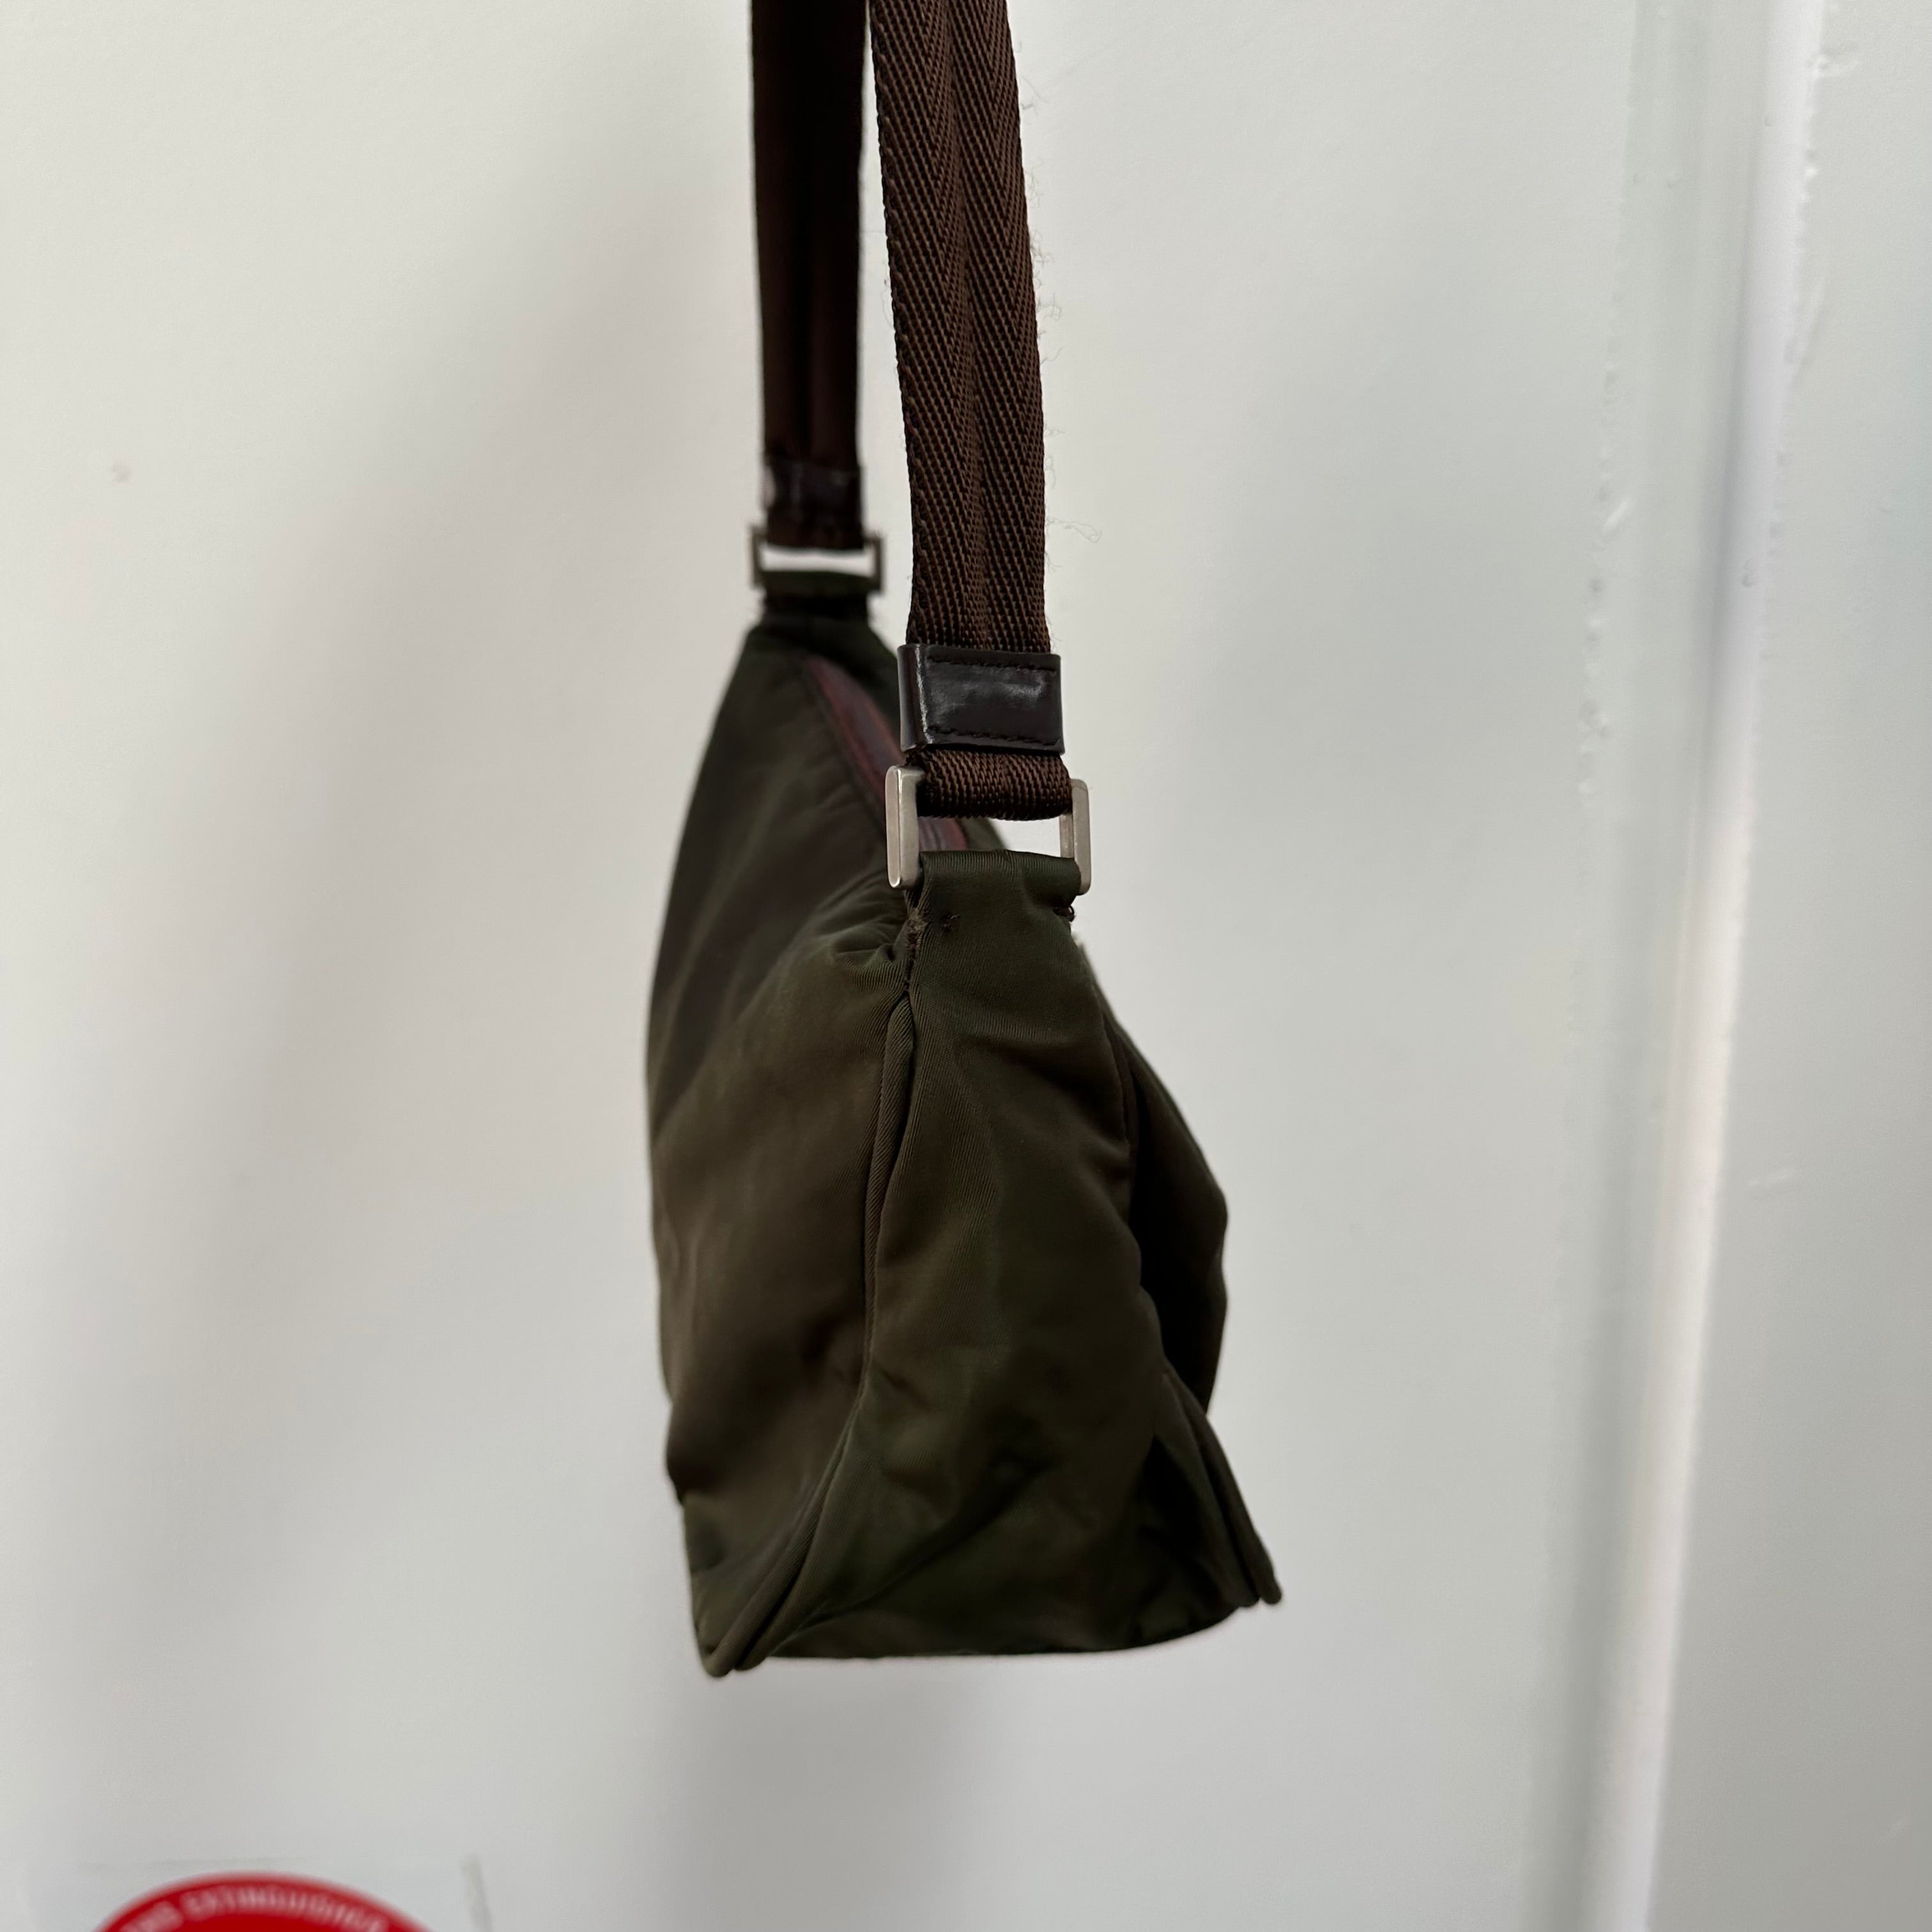 Prada Nylon Shoulder Bag Green